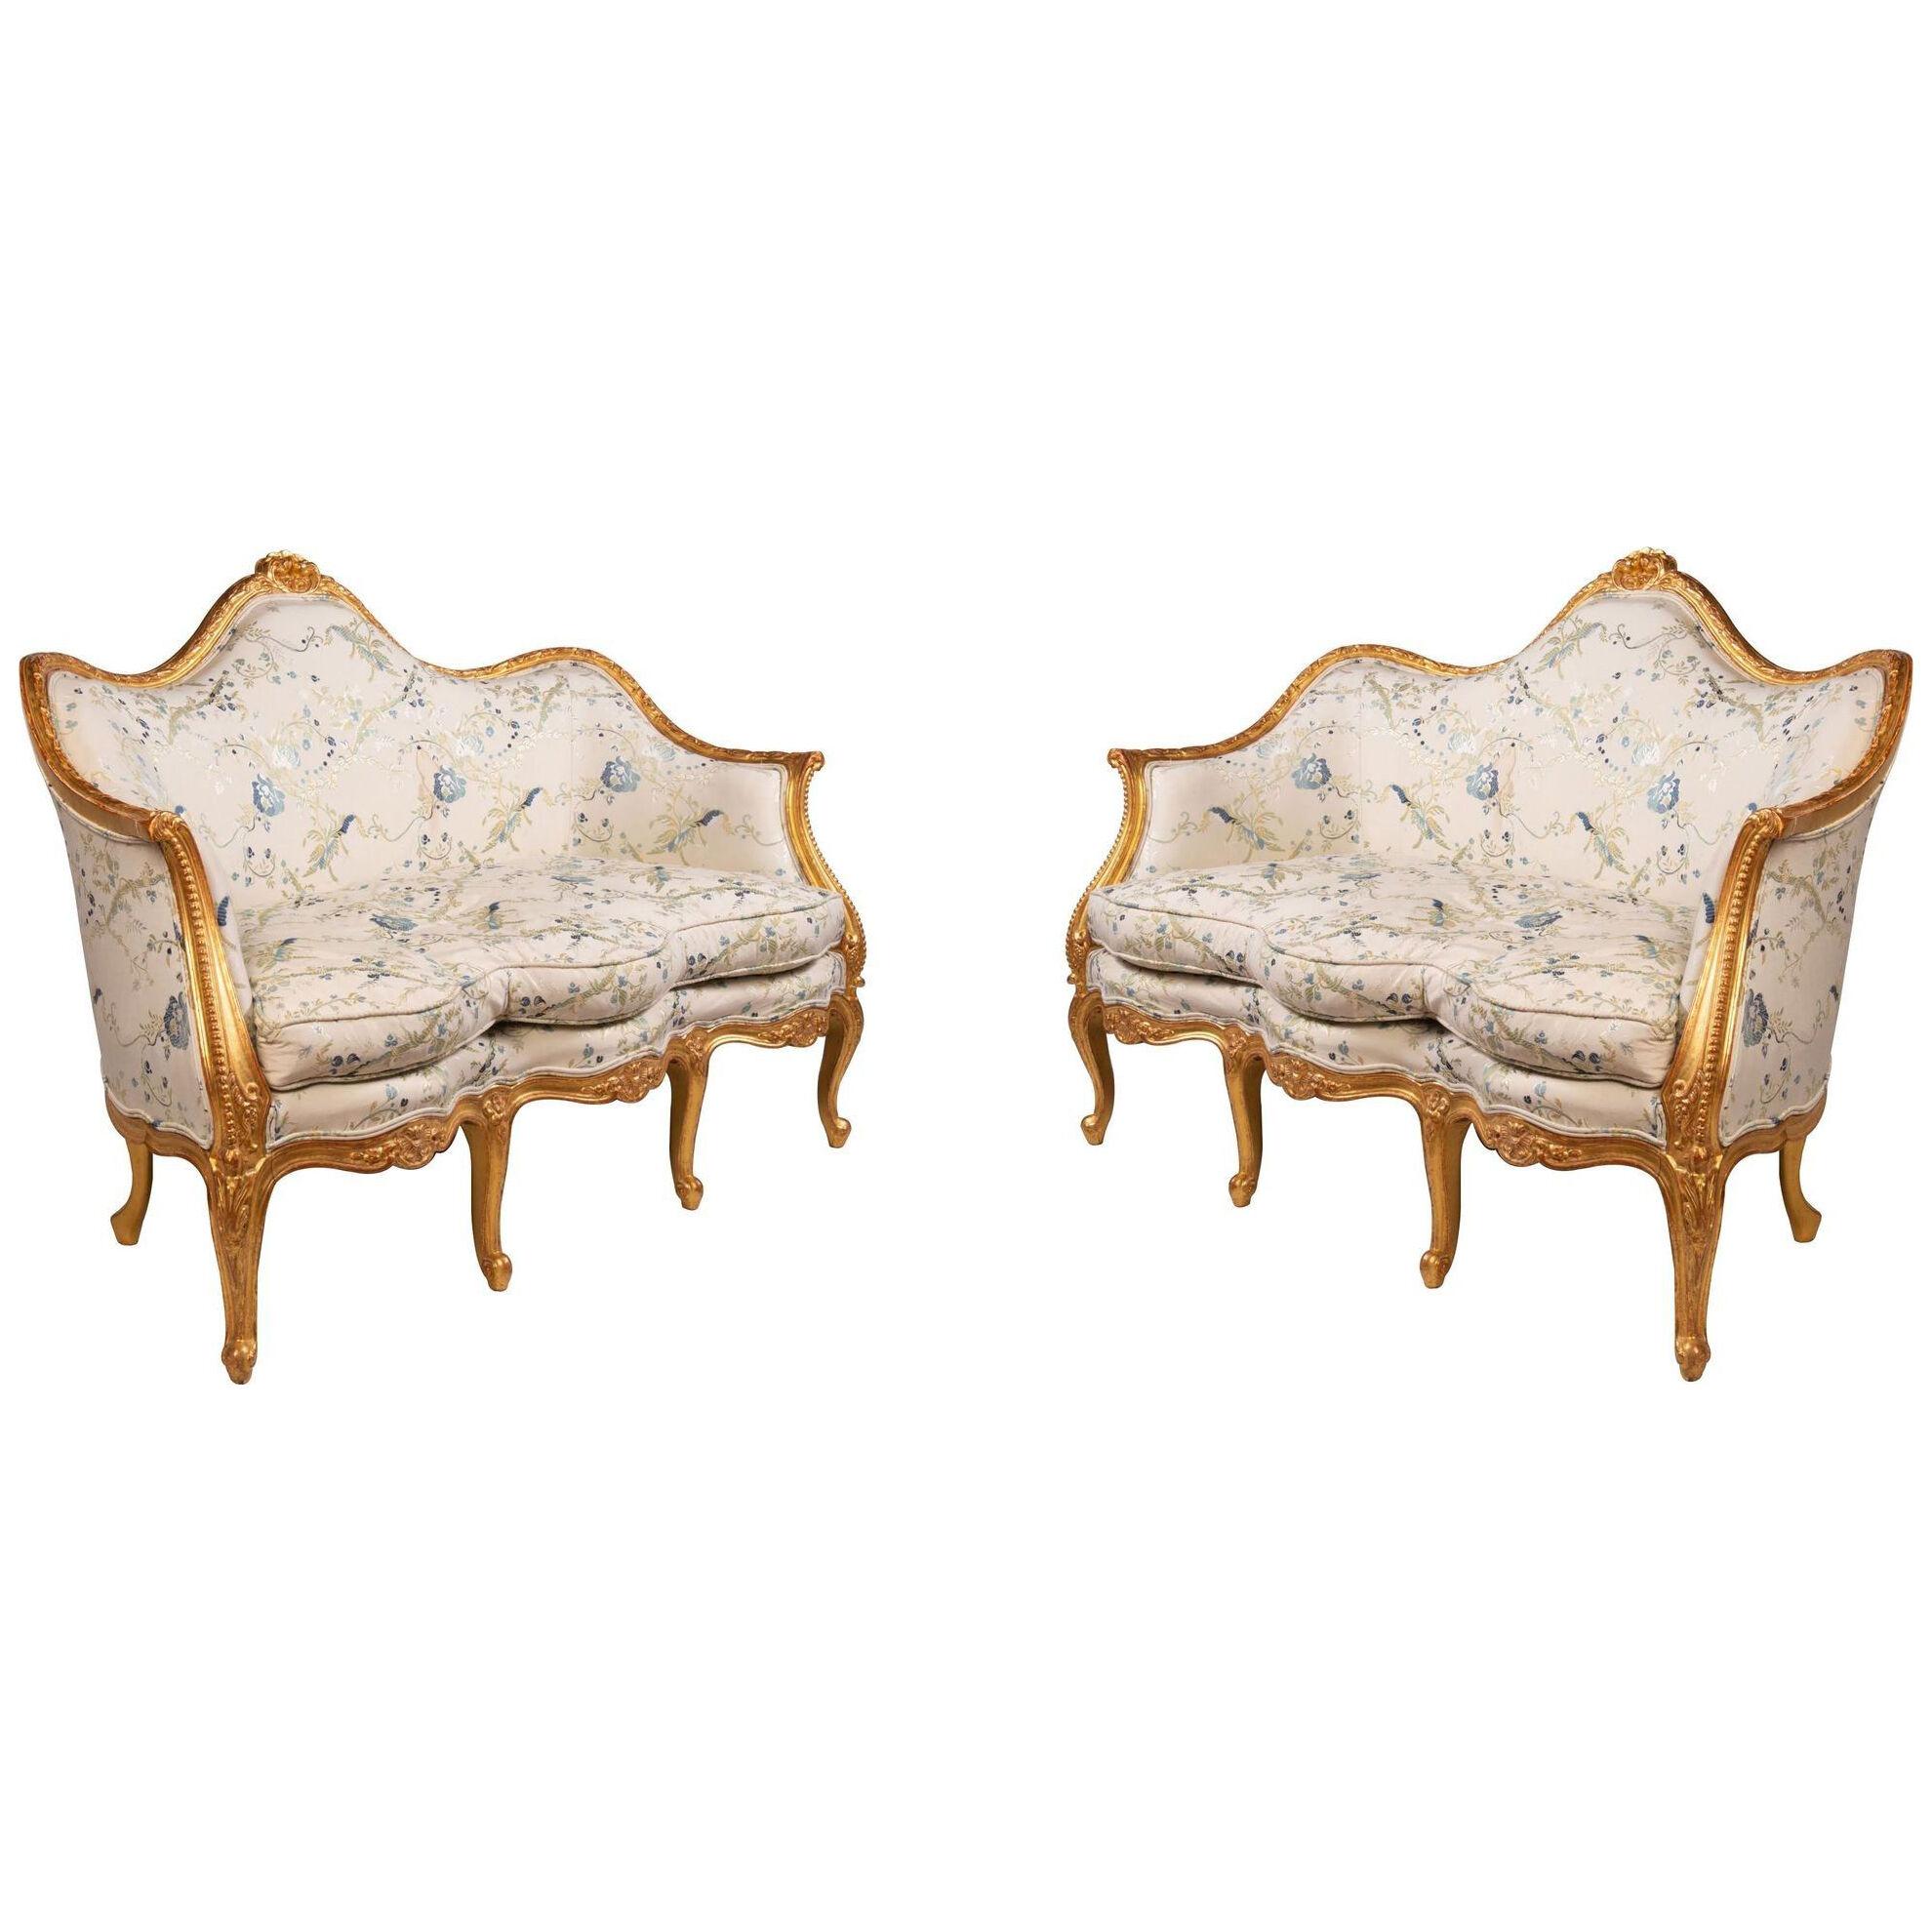 Pair French Hepplewhite style giltwood sofas, circa 1860